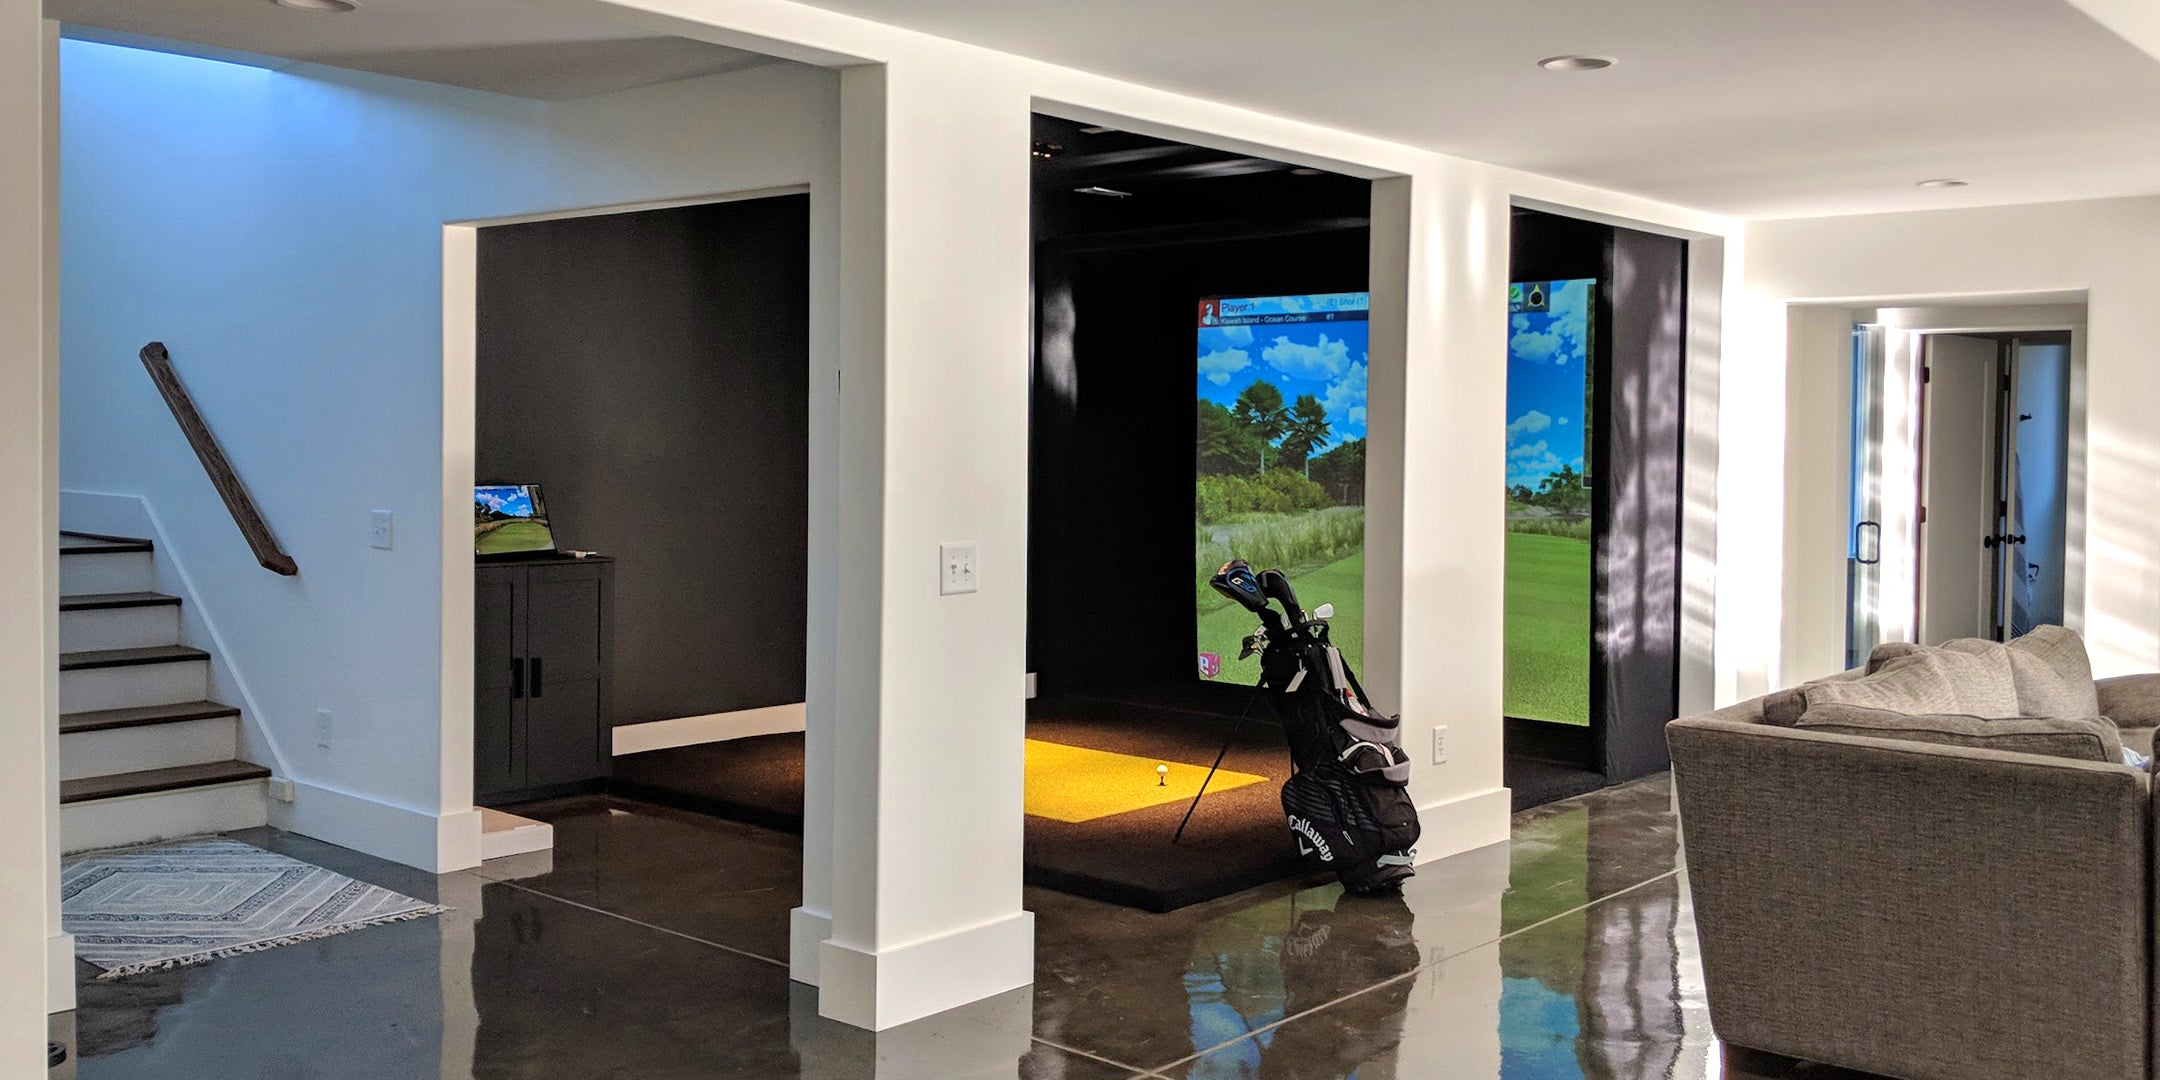 golf simulator in home basement running golf simulation